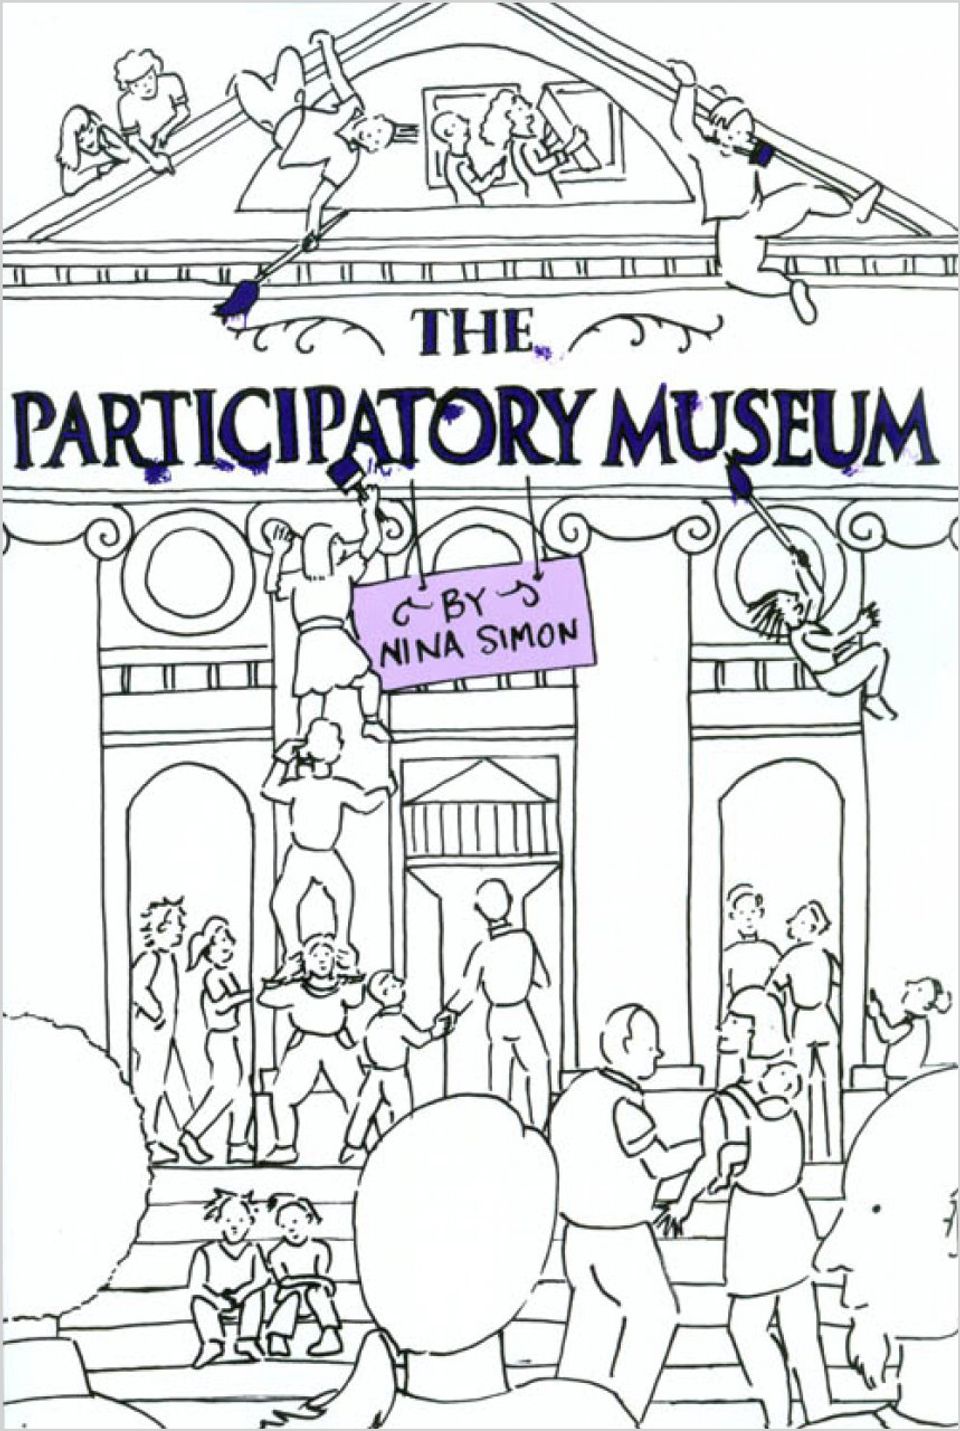 The Participatory Museum by Nina Simon